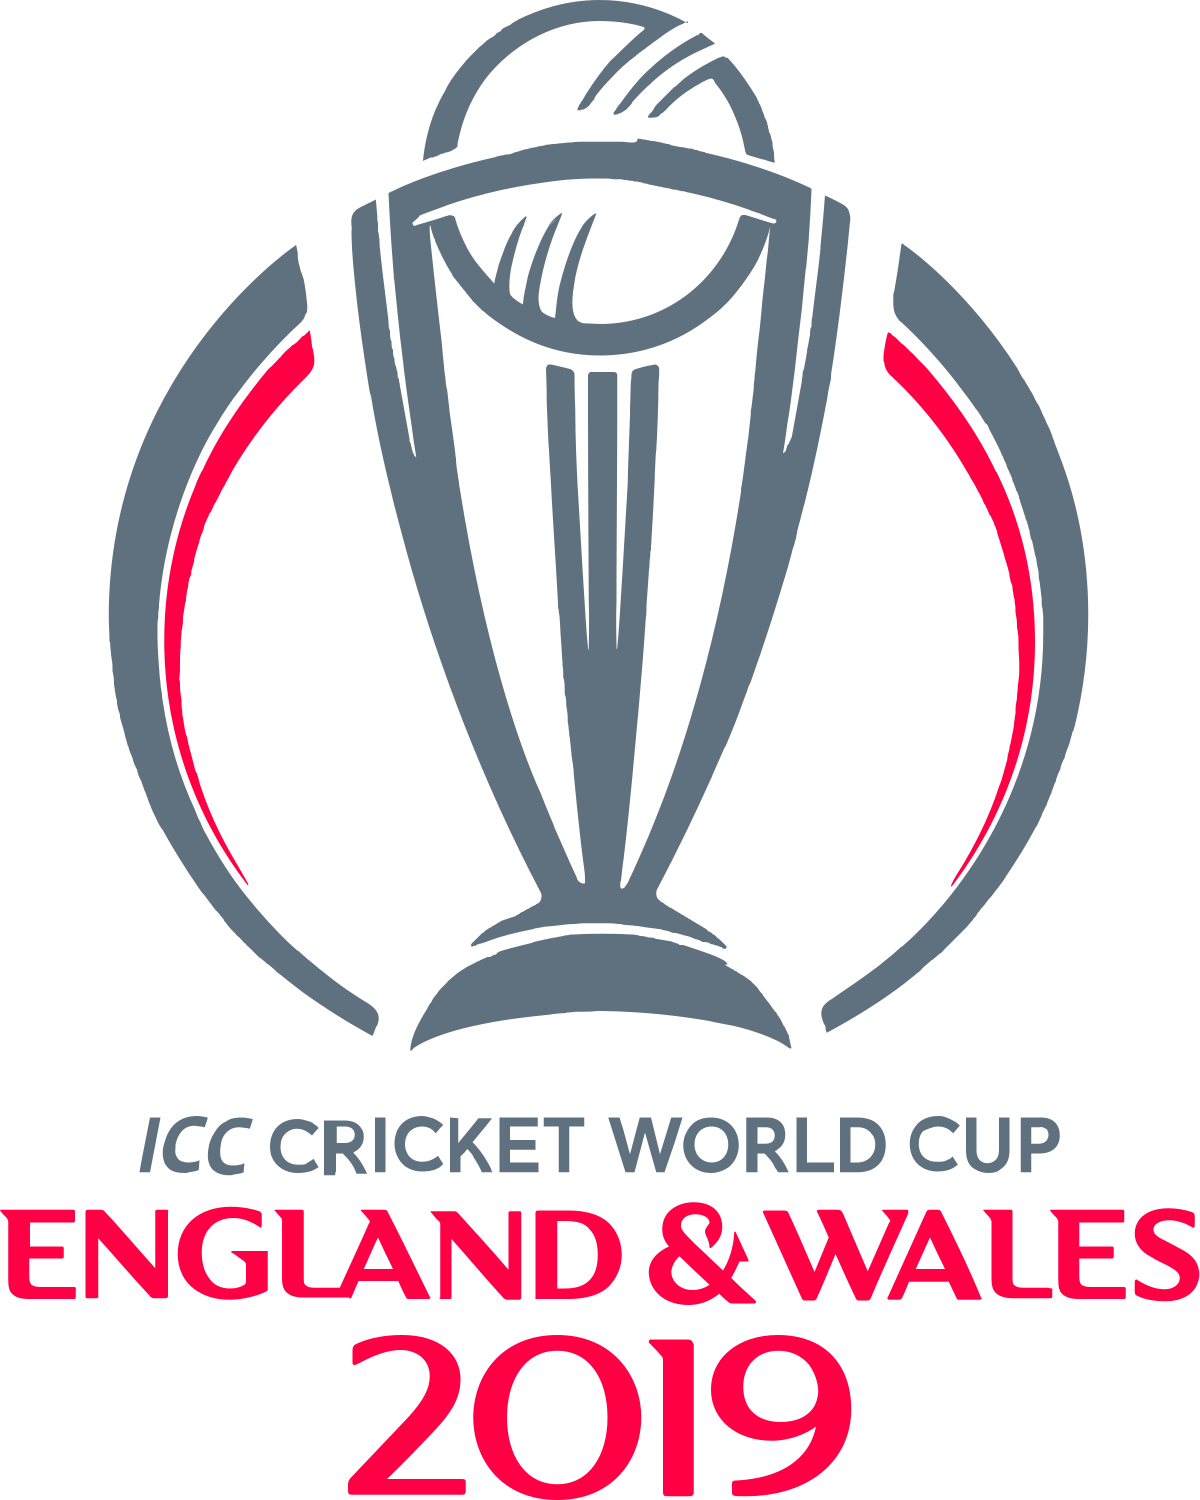 ICC Cricket World Cup 2019 Logo PNG Transparent Image